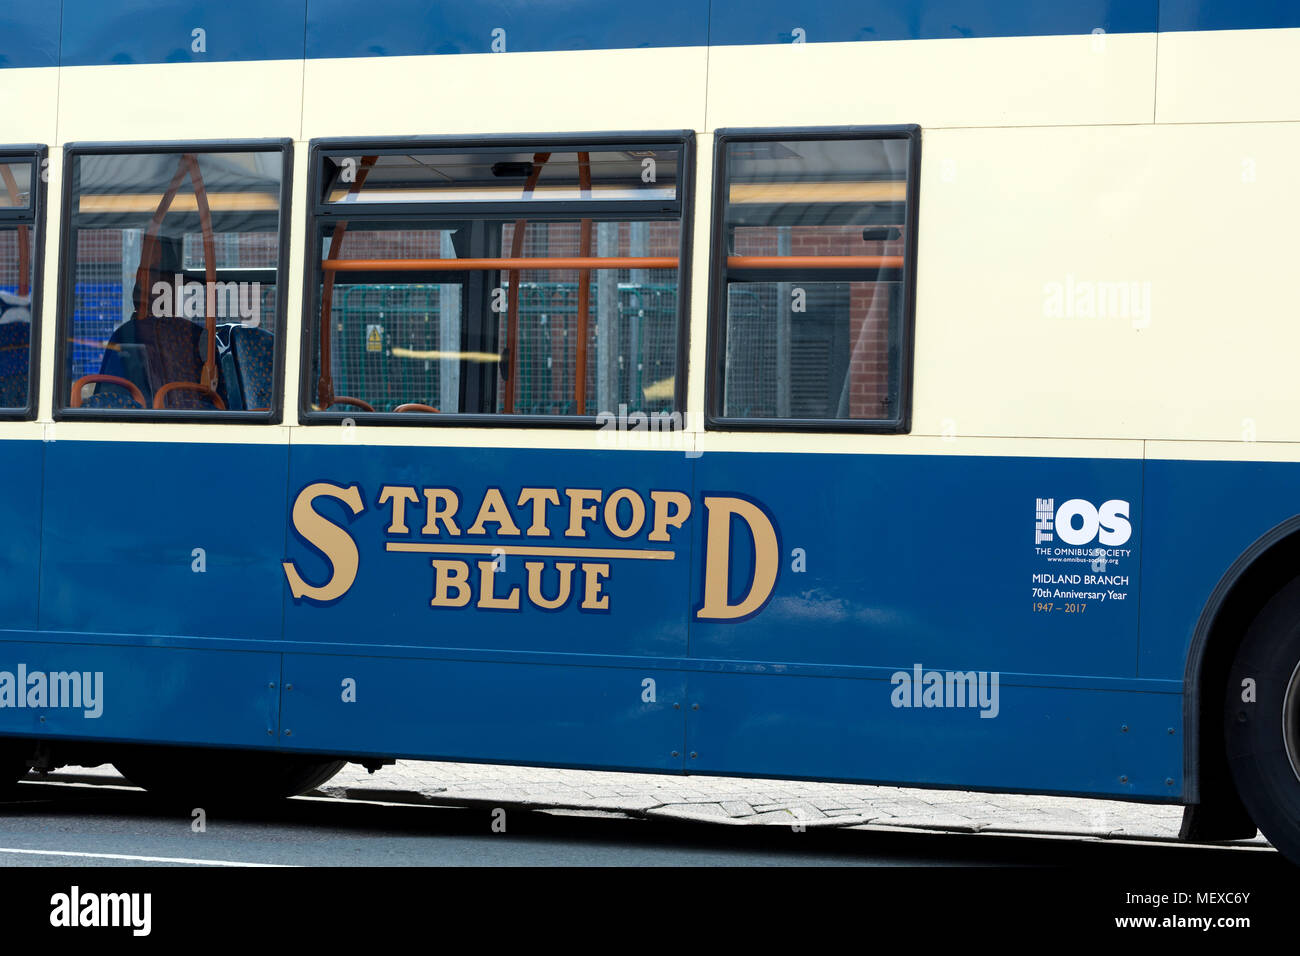 A Stagecoach bus in retro Stratford Blue livery, Stratford-upon-Avon, UK Stock Photo